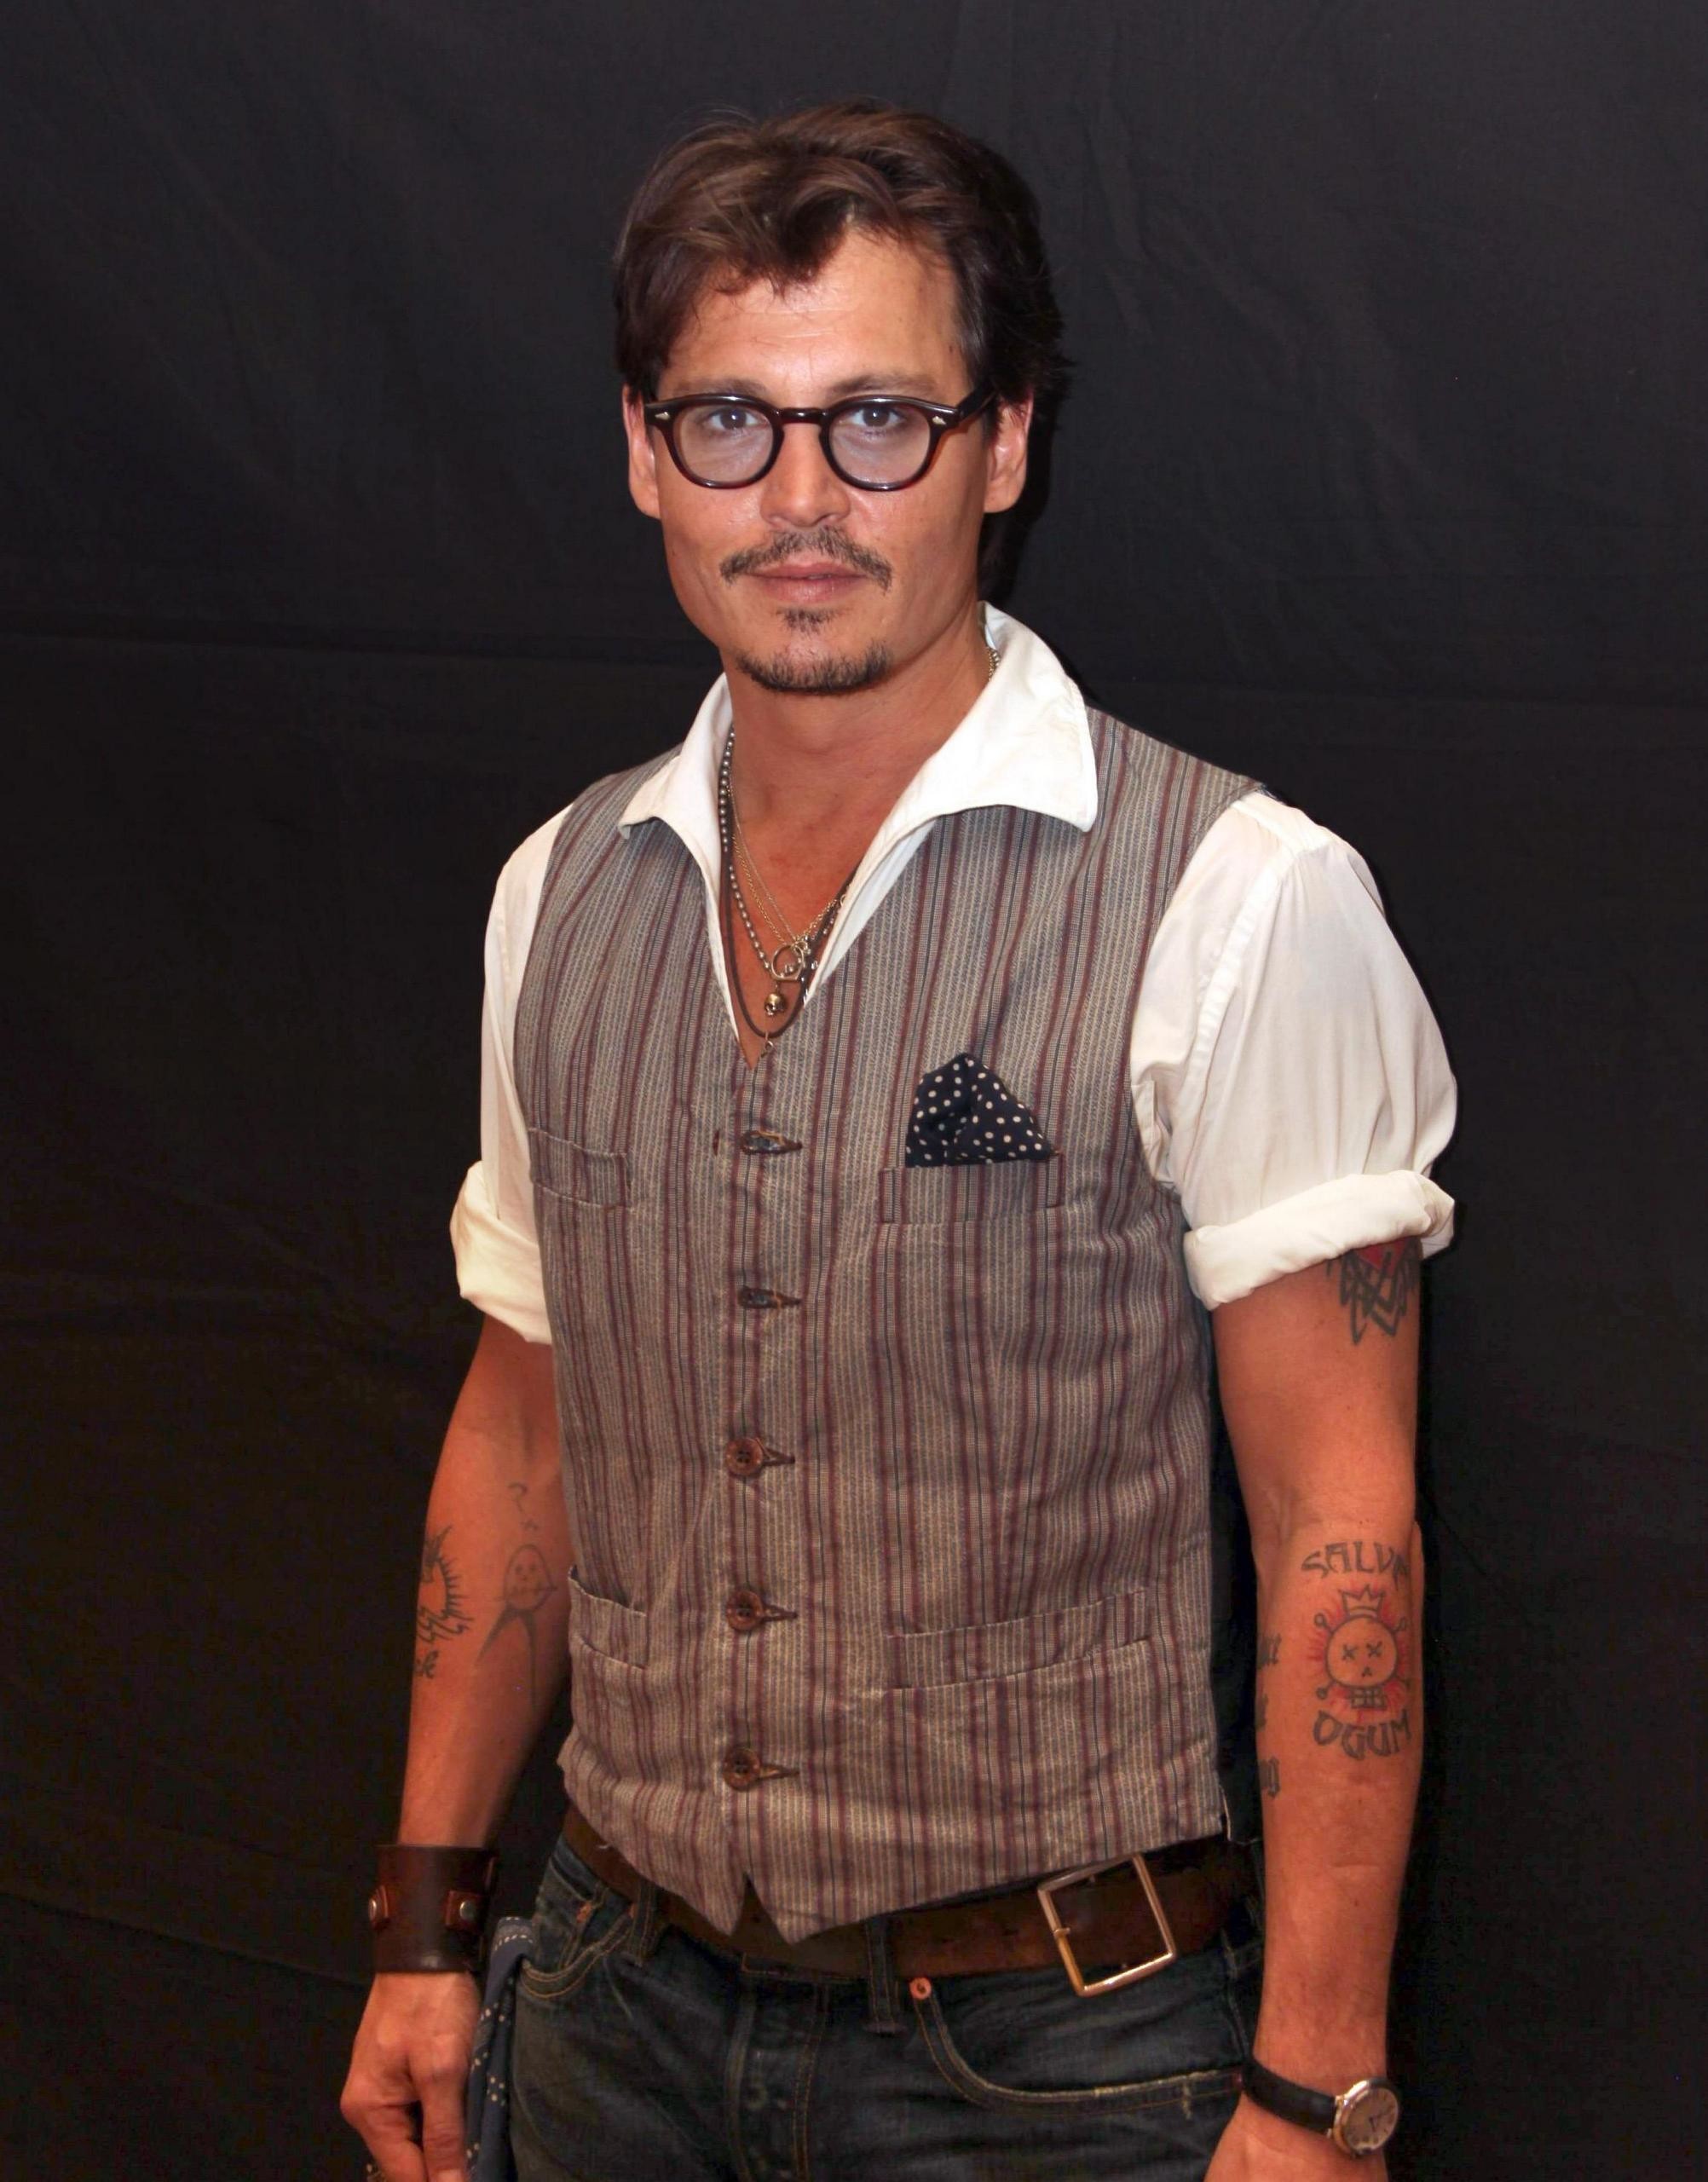 2004x2560 840x1160 Johnny Depp In Specs Photoshoot, Full HD Wallpaper">